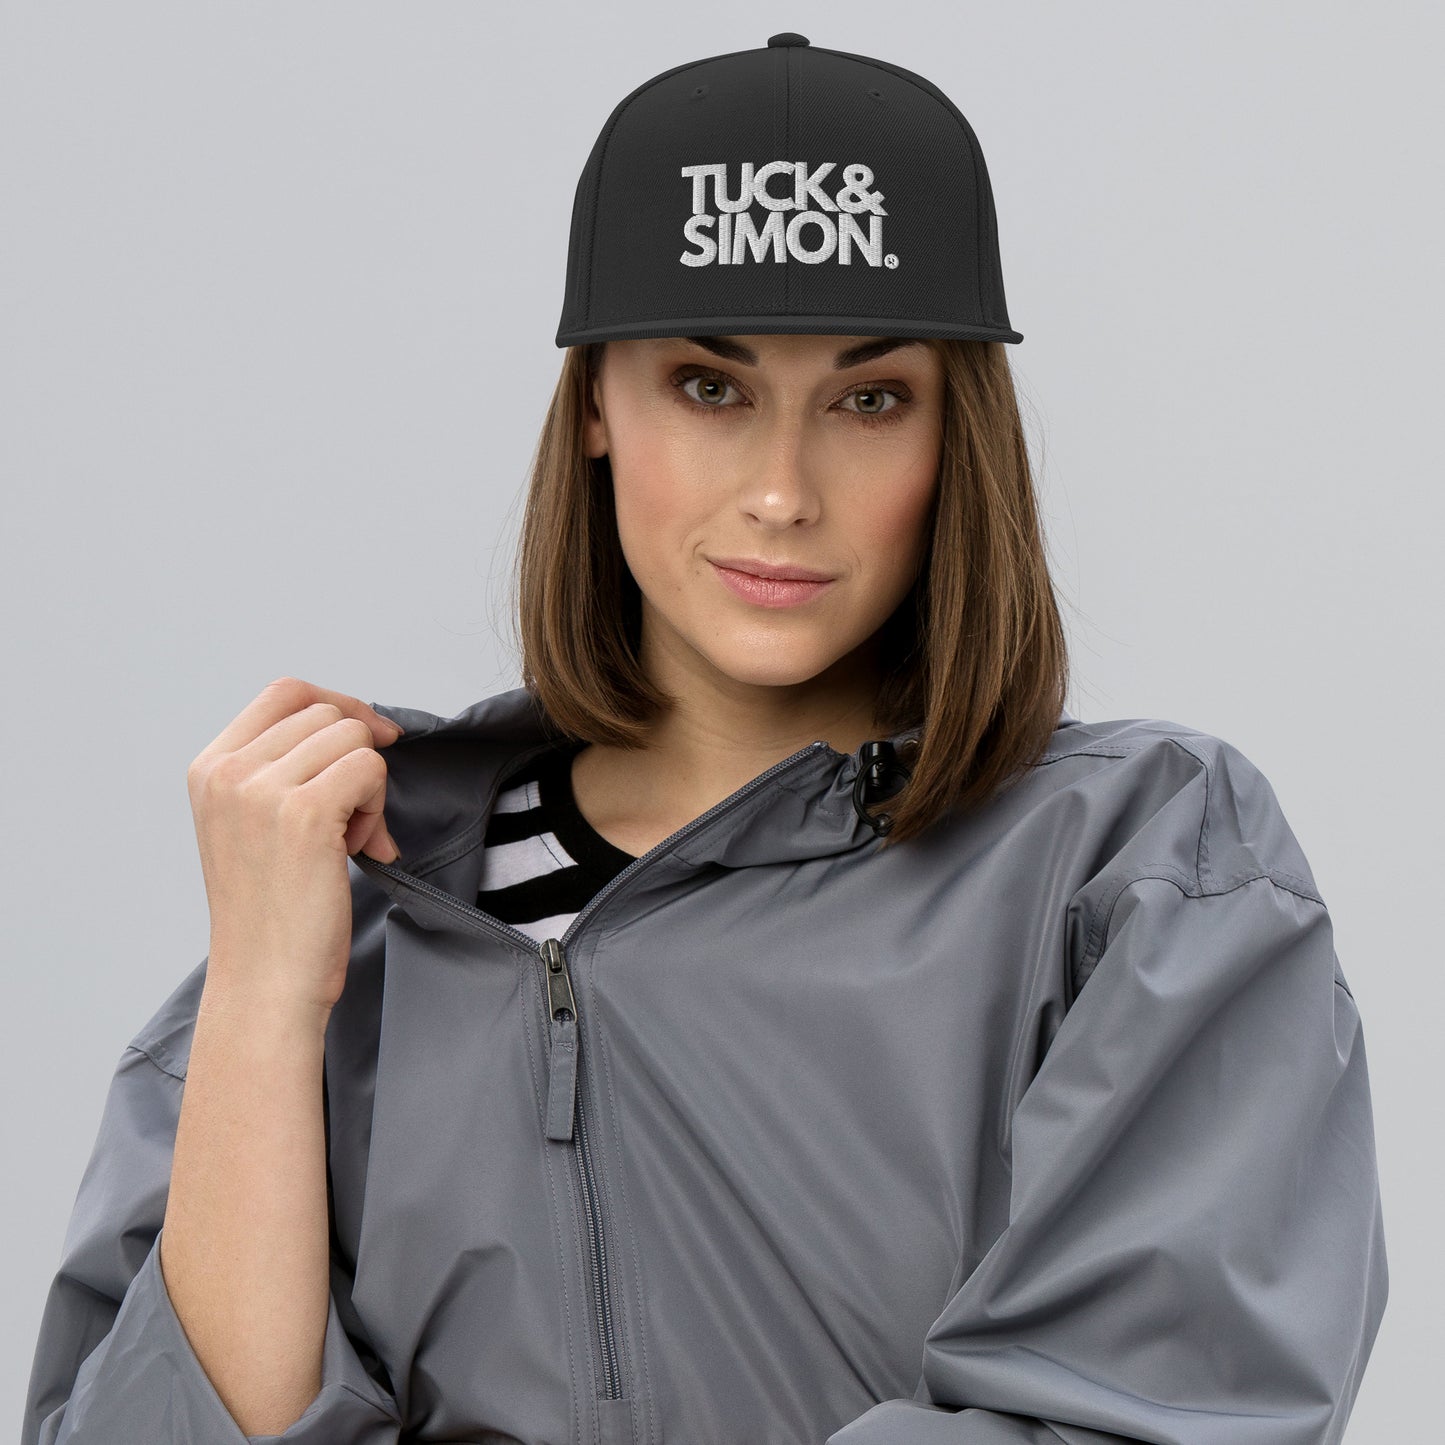 Tuck&Simon Snapback Hat